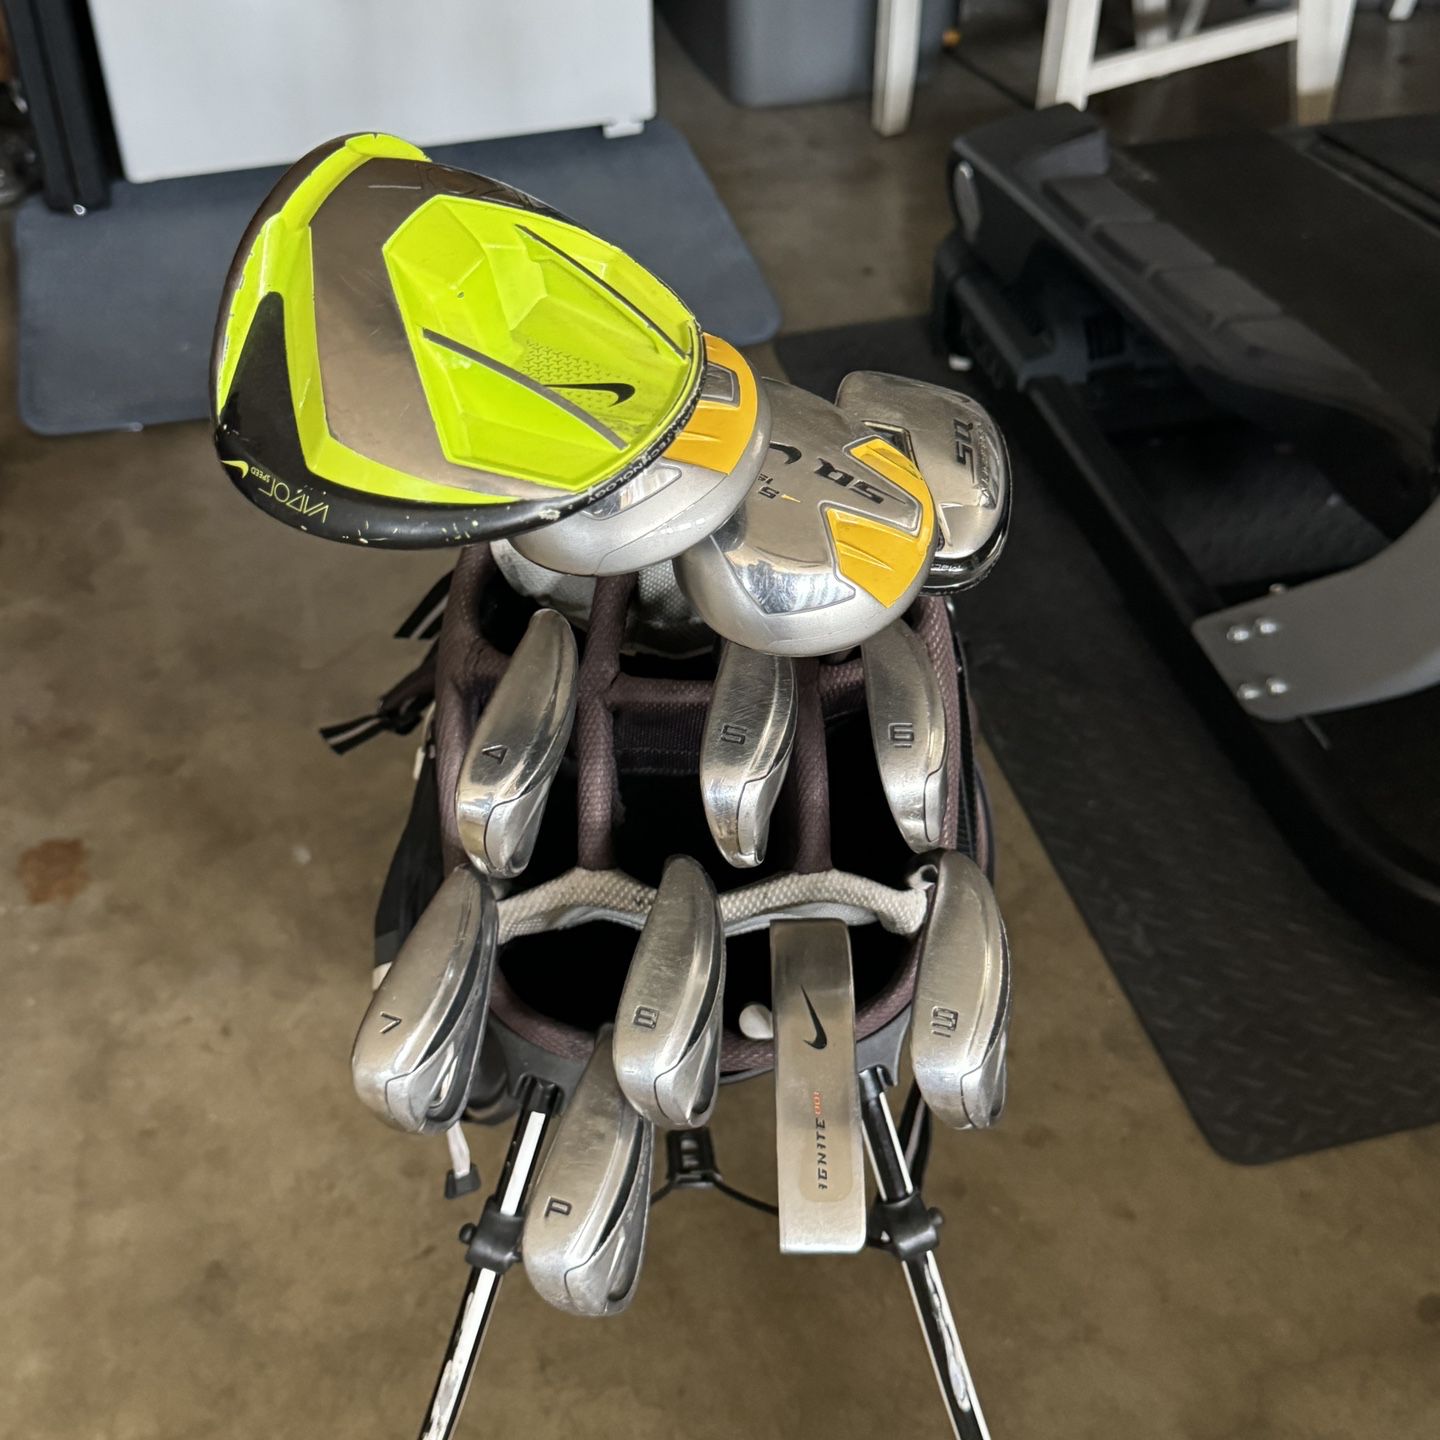 Nike Golf Clubs (set) And Bag